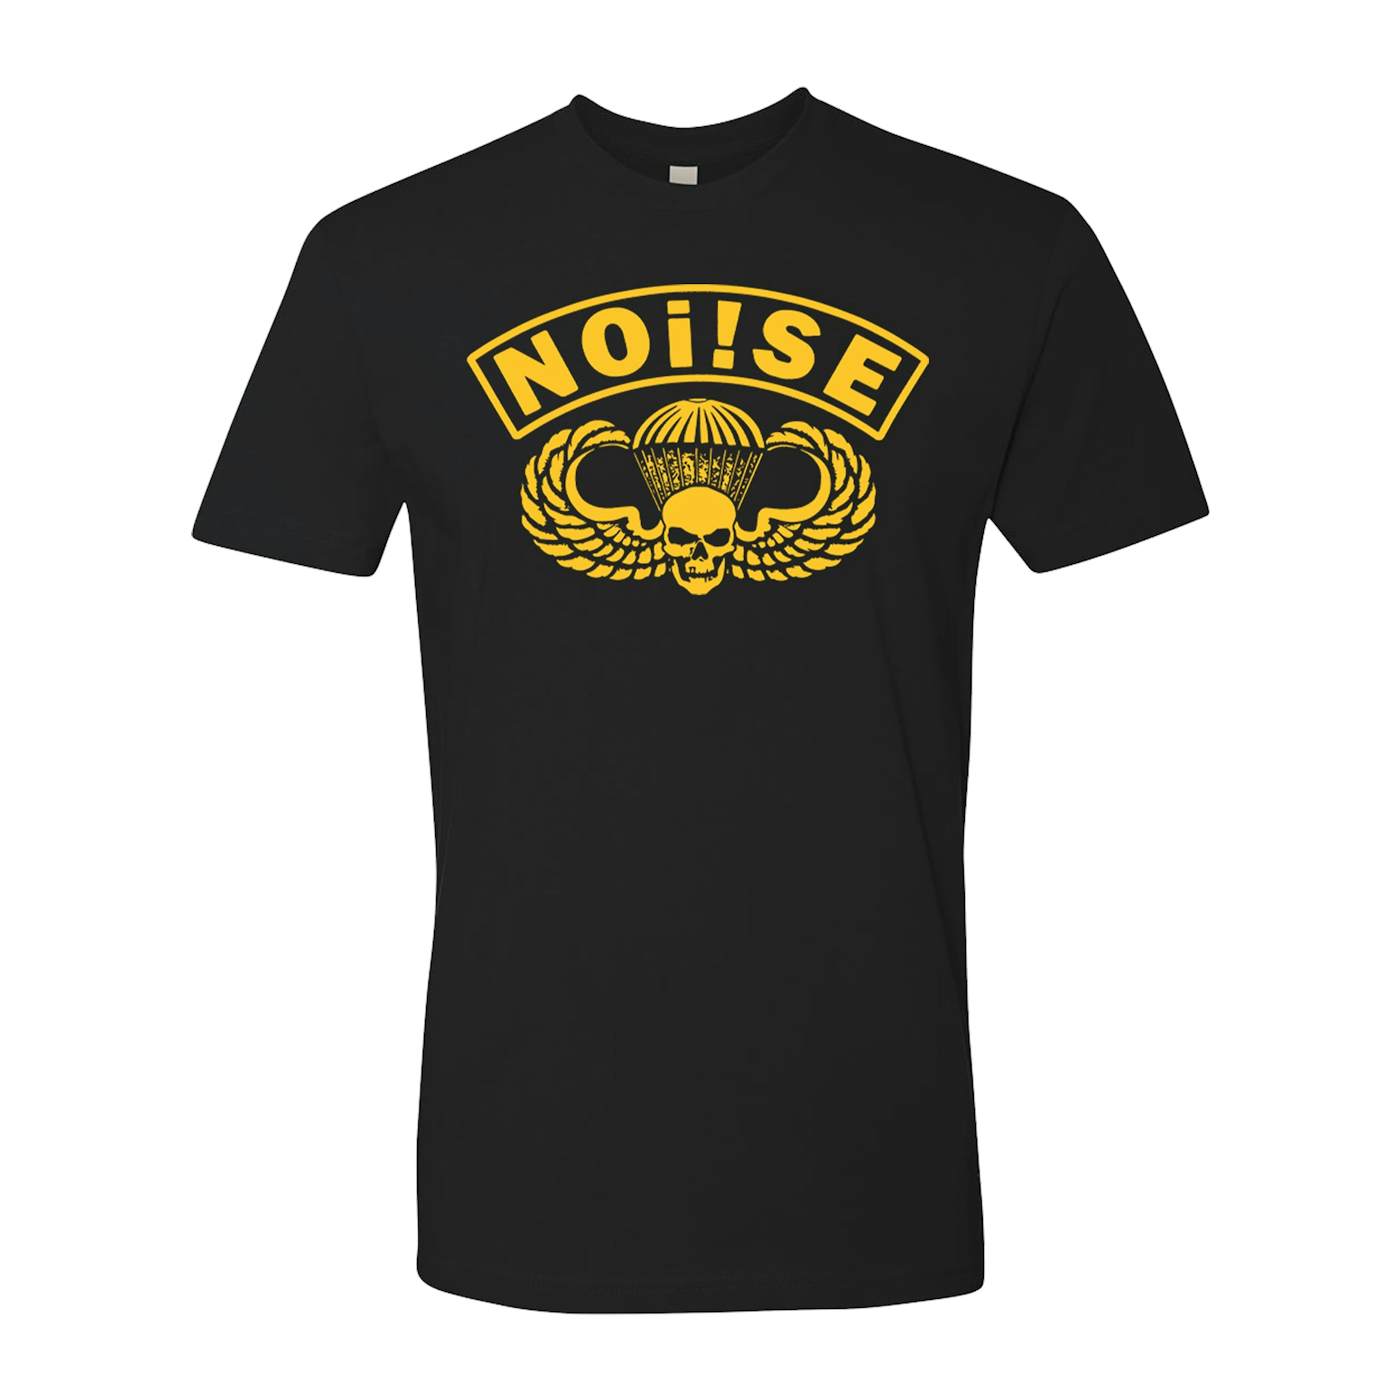 NOi!SE - Parachute Logo - Yellow on Black - T-Shirt